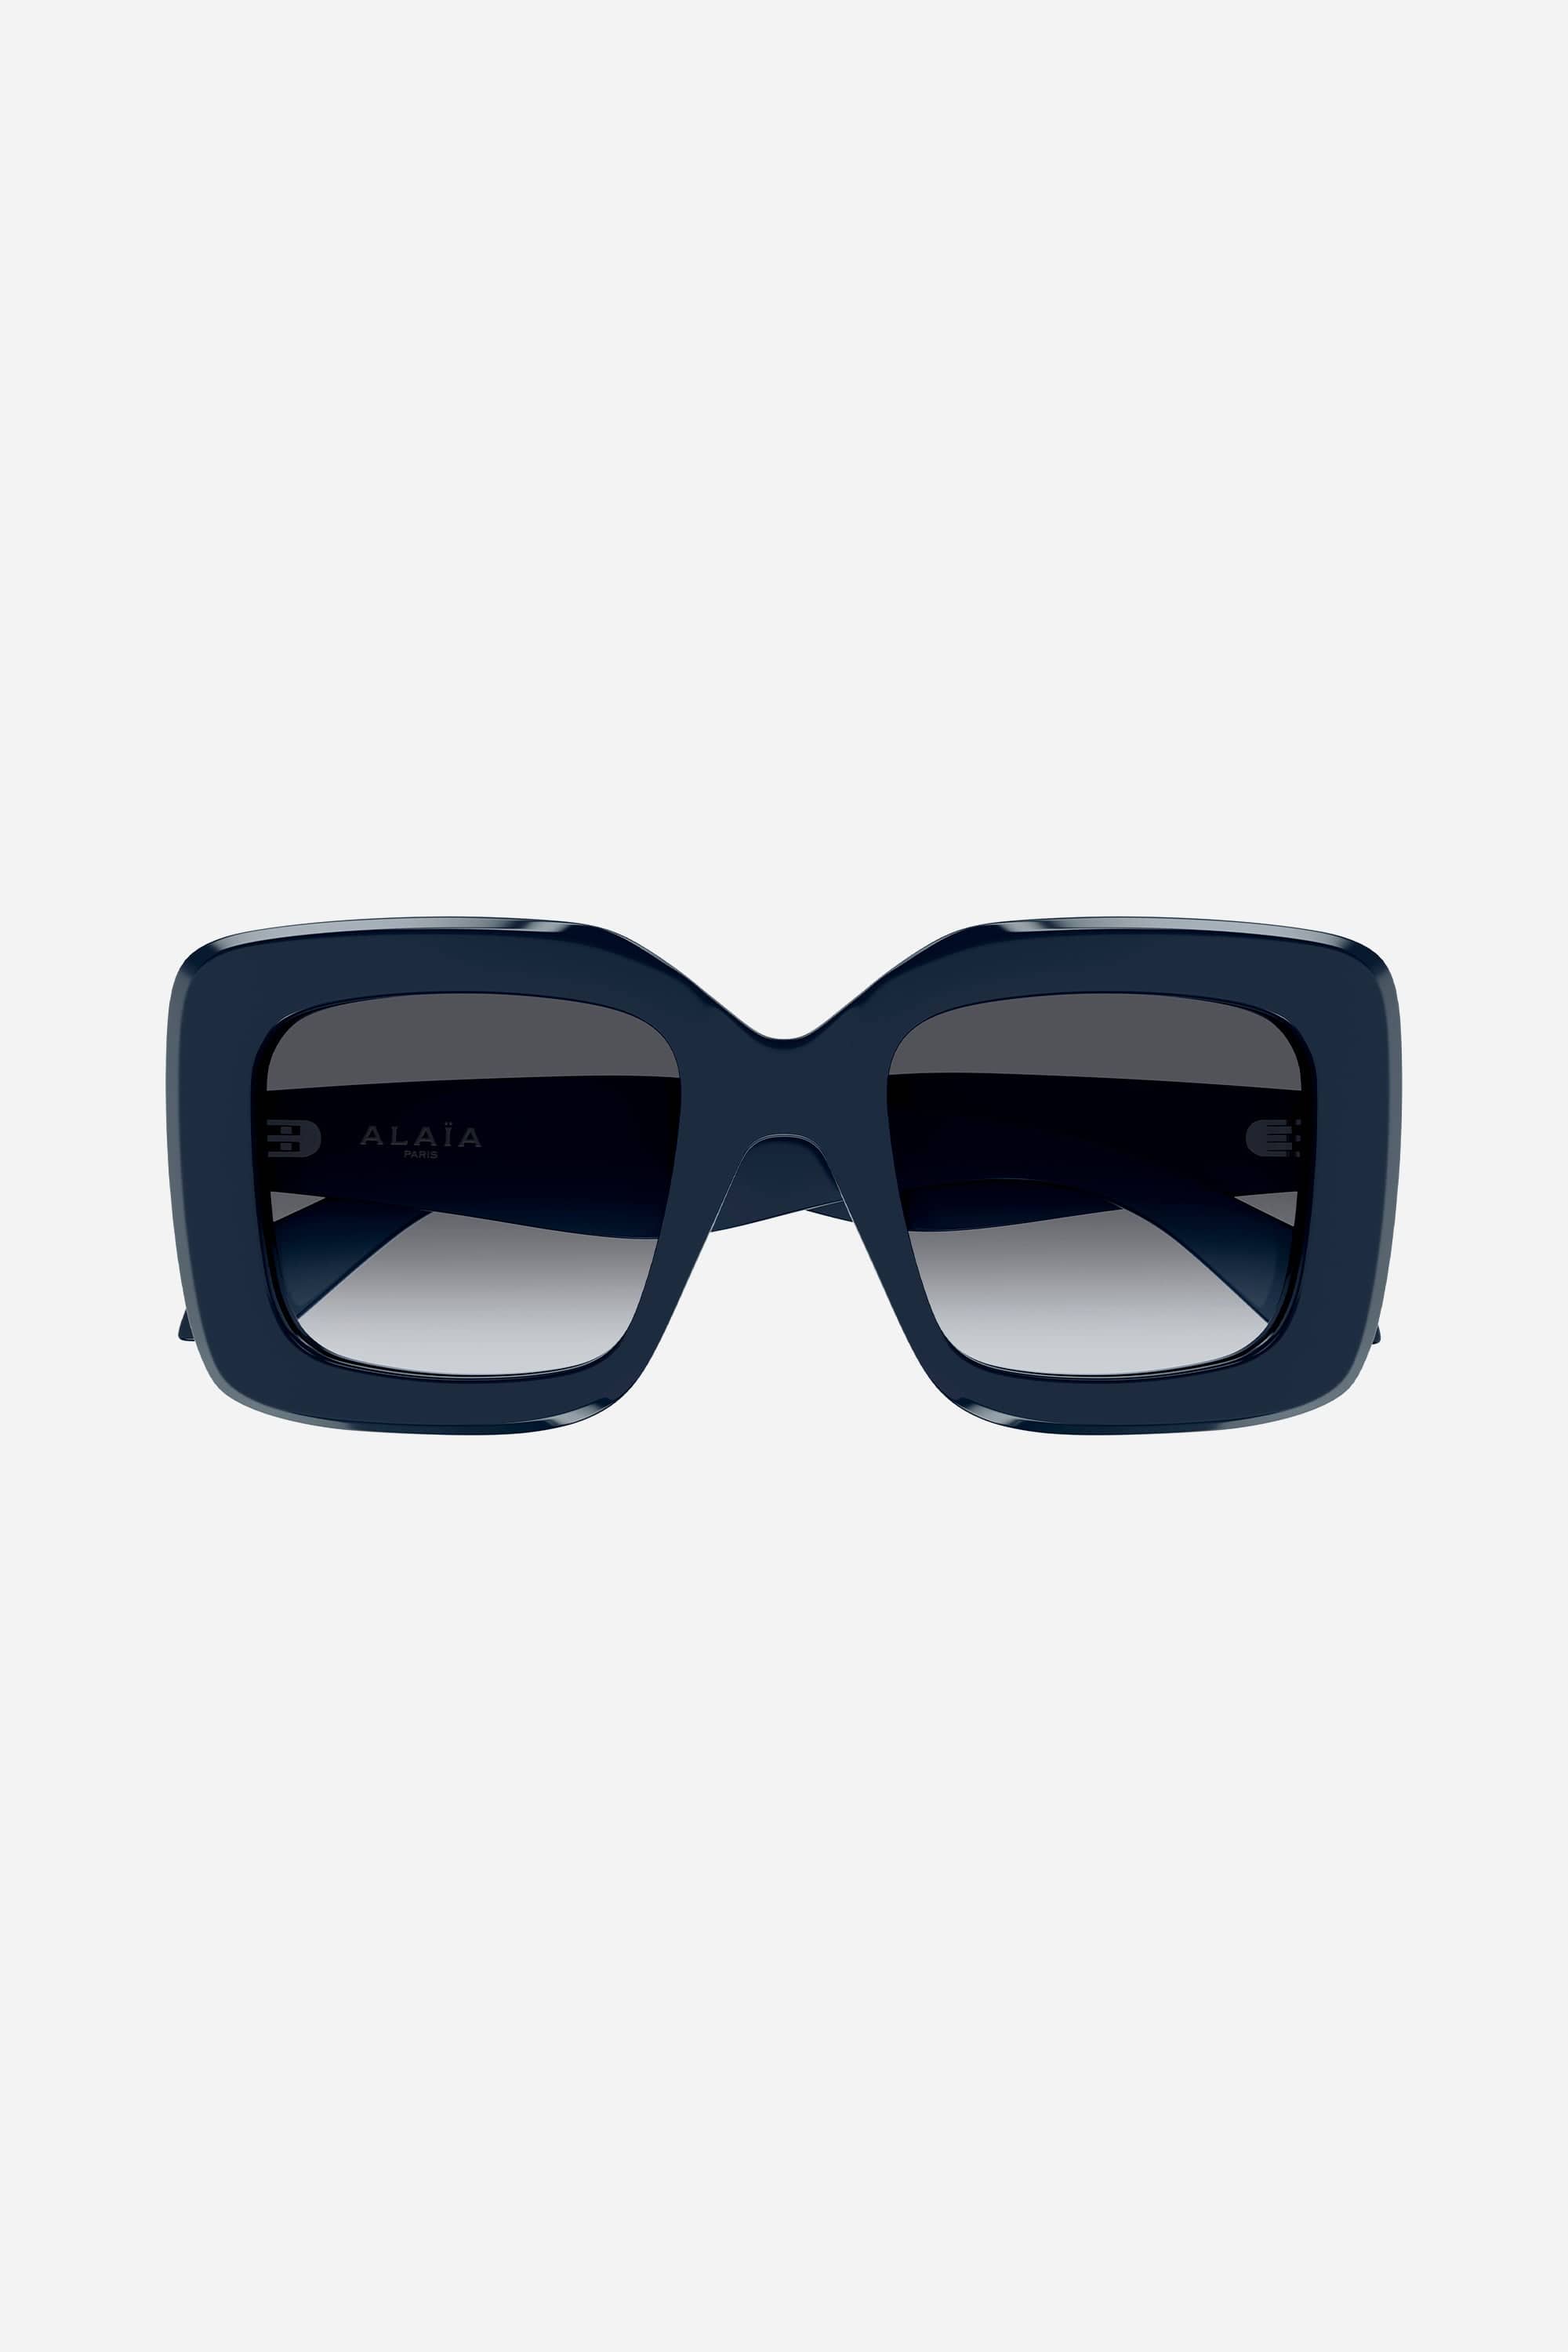 Alaia Blue Squared Sunglasses - Eyewear Club